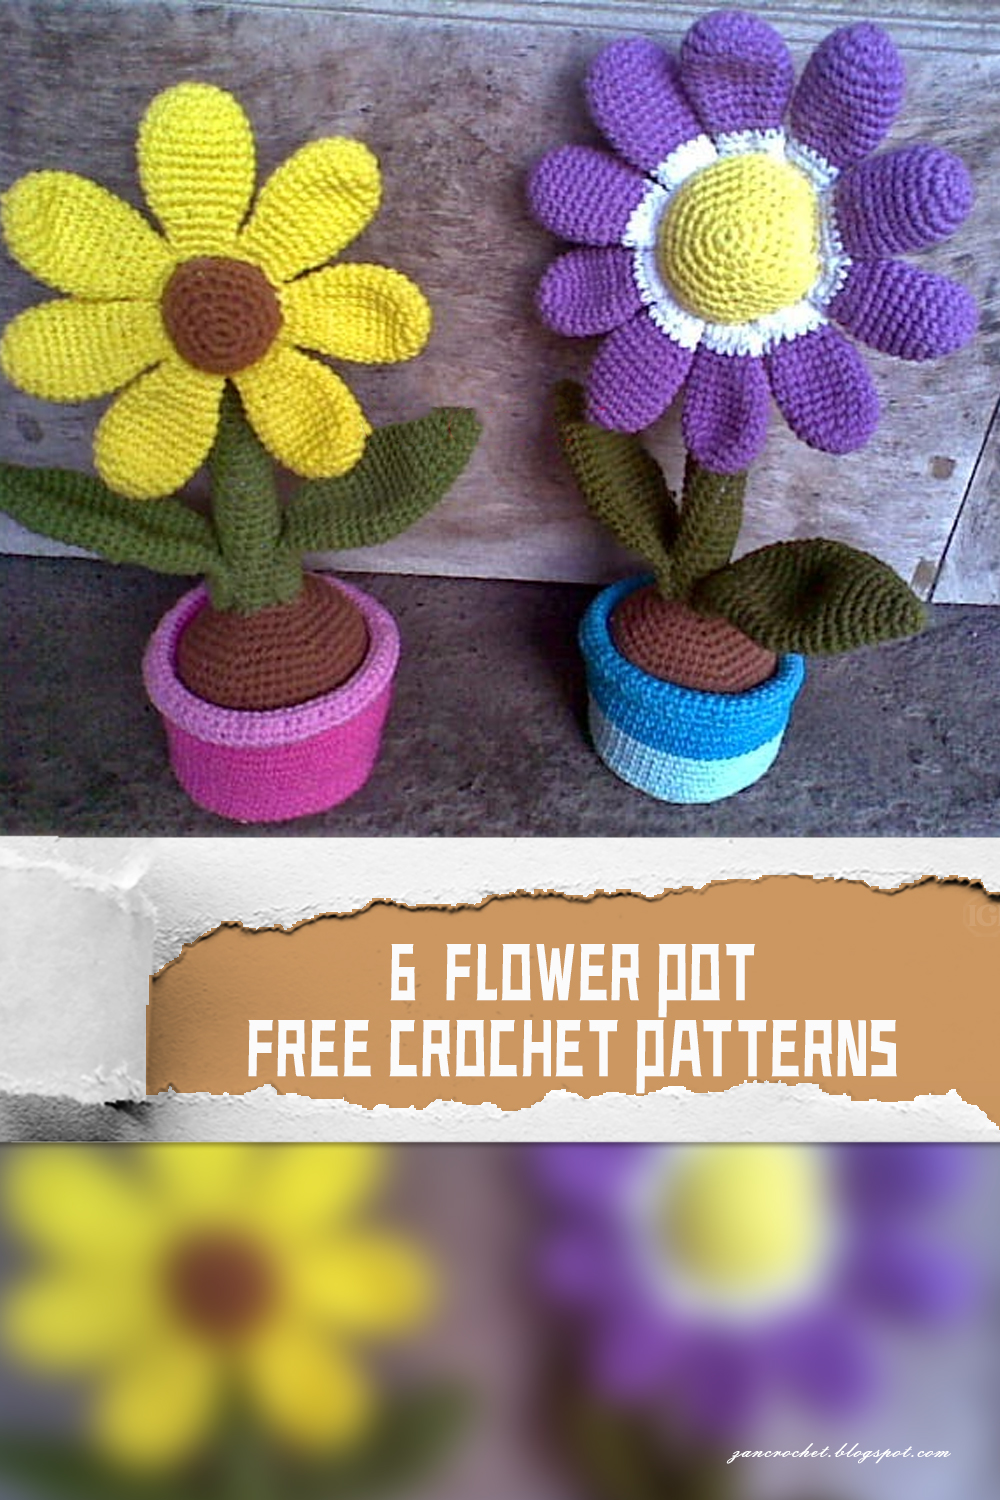 6 Flower Pot FREE Crochet Patterns